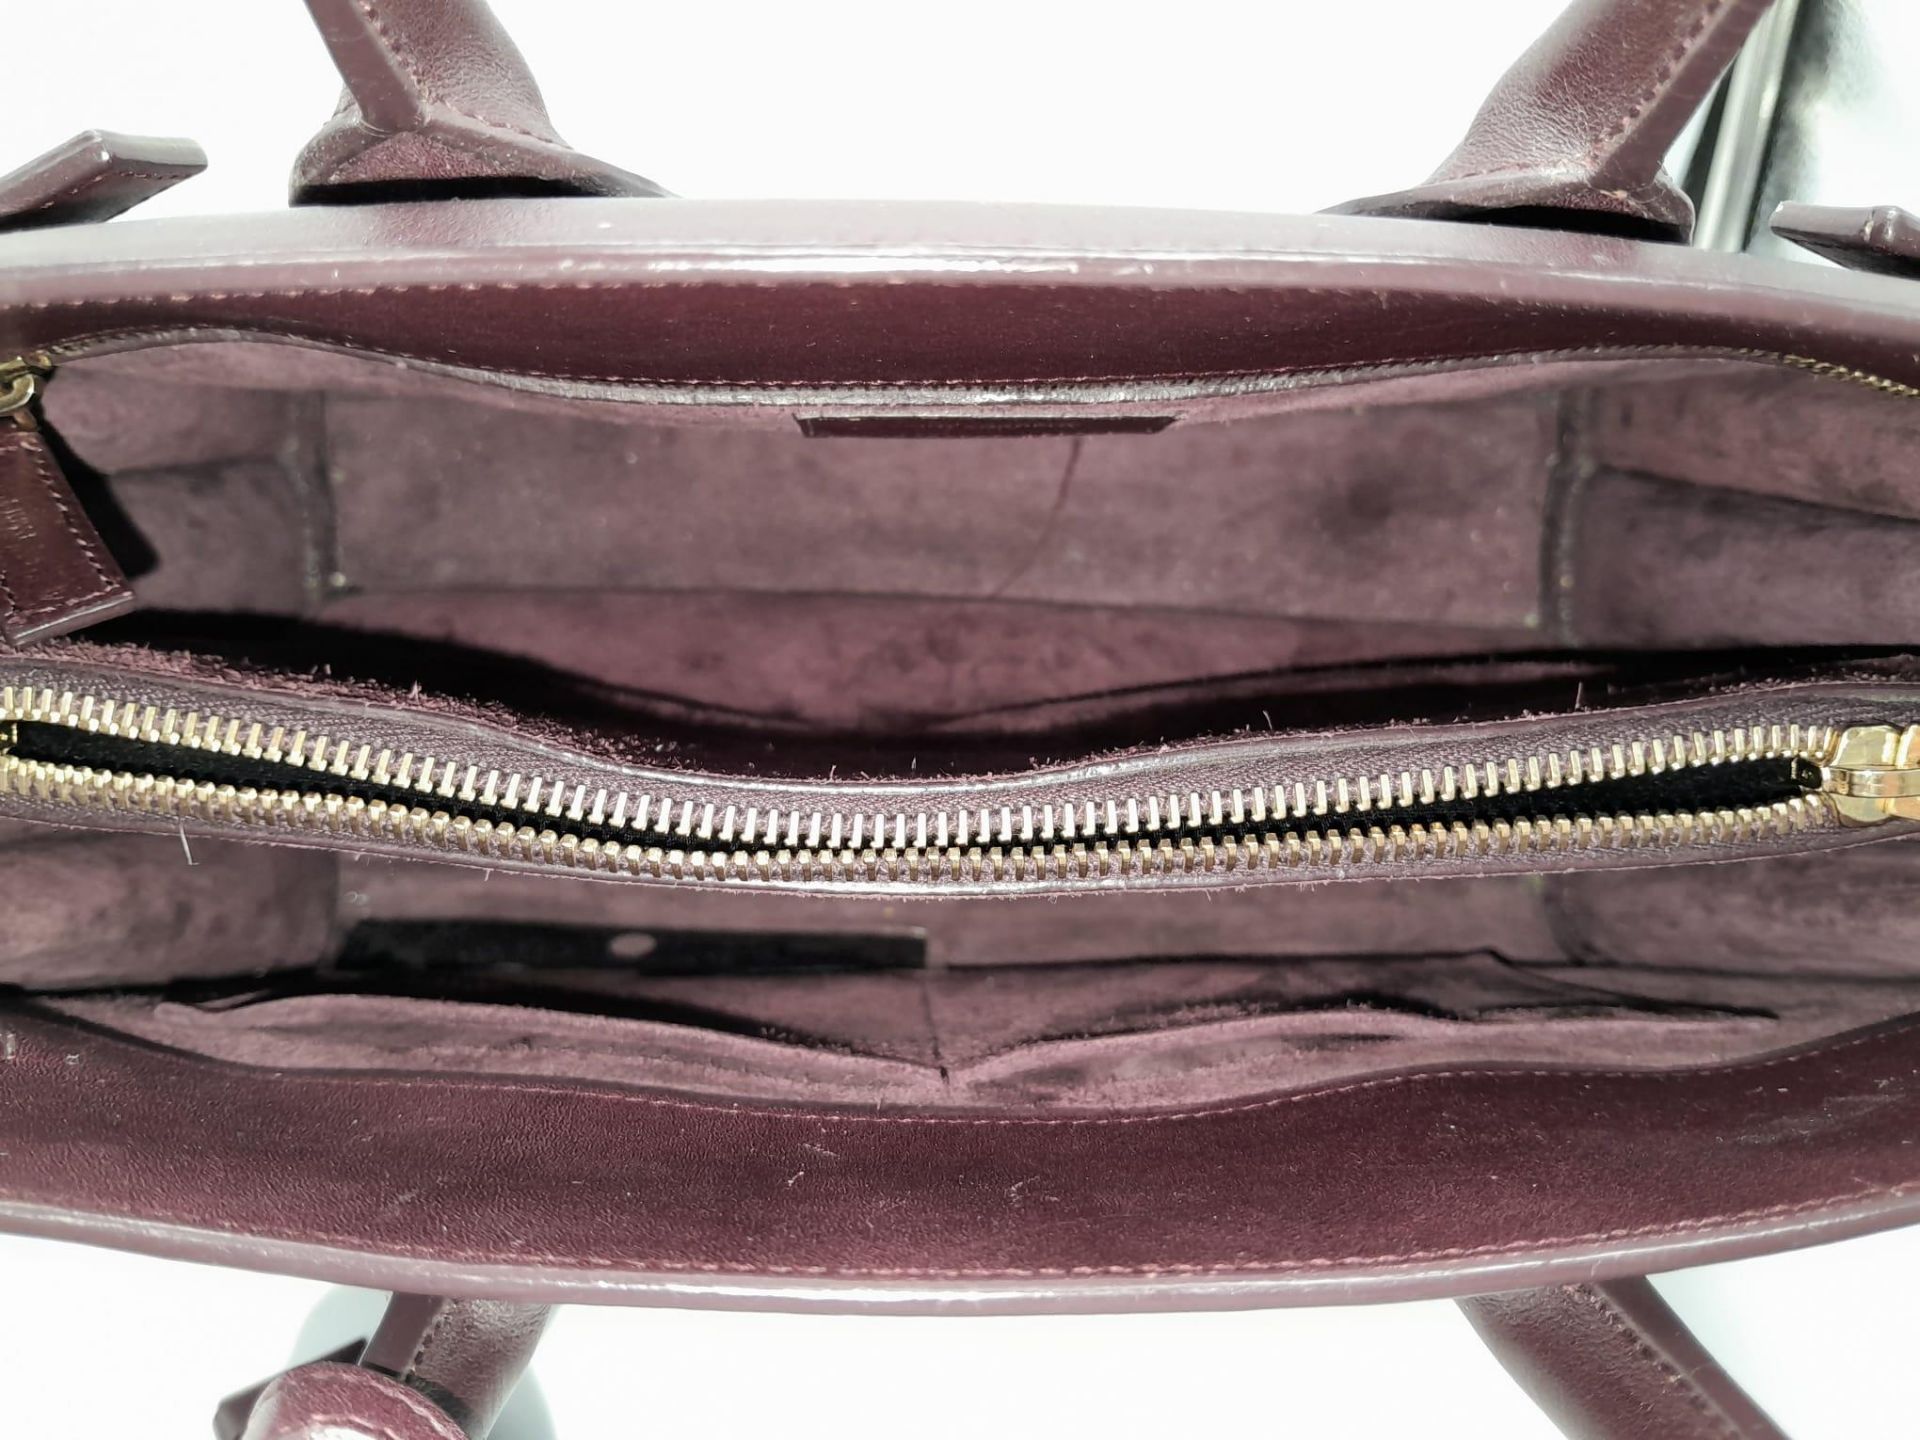 A Saint Laurent Sac De Jour Burgundy Handbag. Leather Exterior, Gold Tone Hardware, Double Handle in - Image 6 of 11